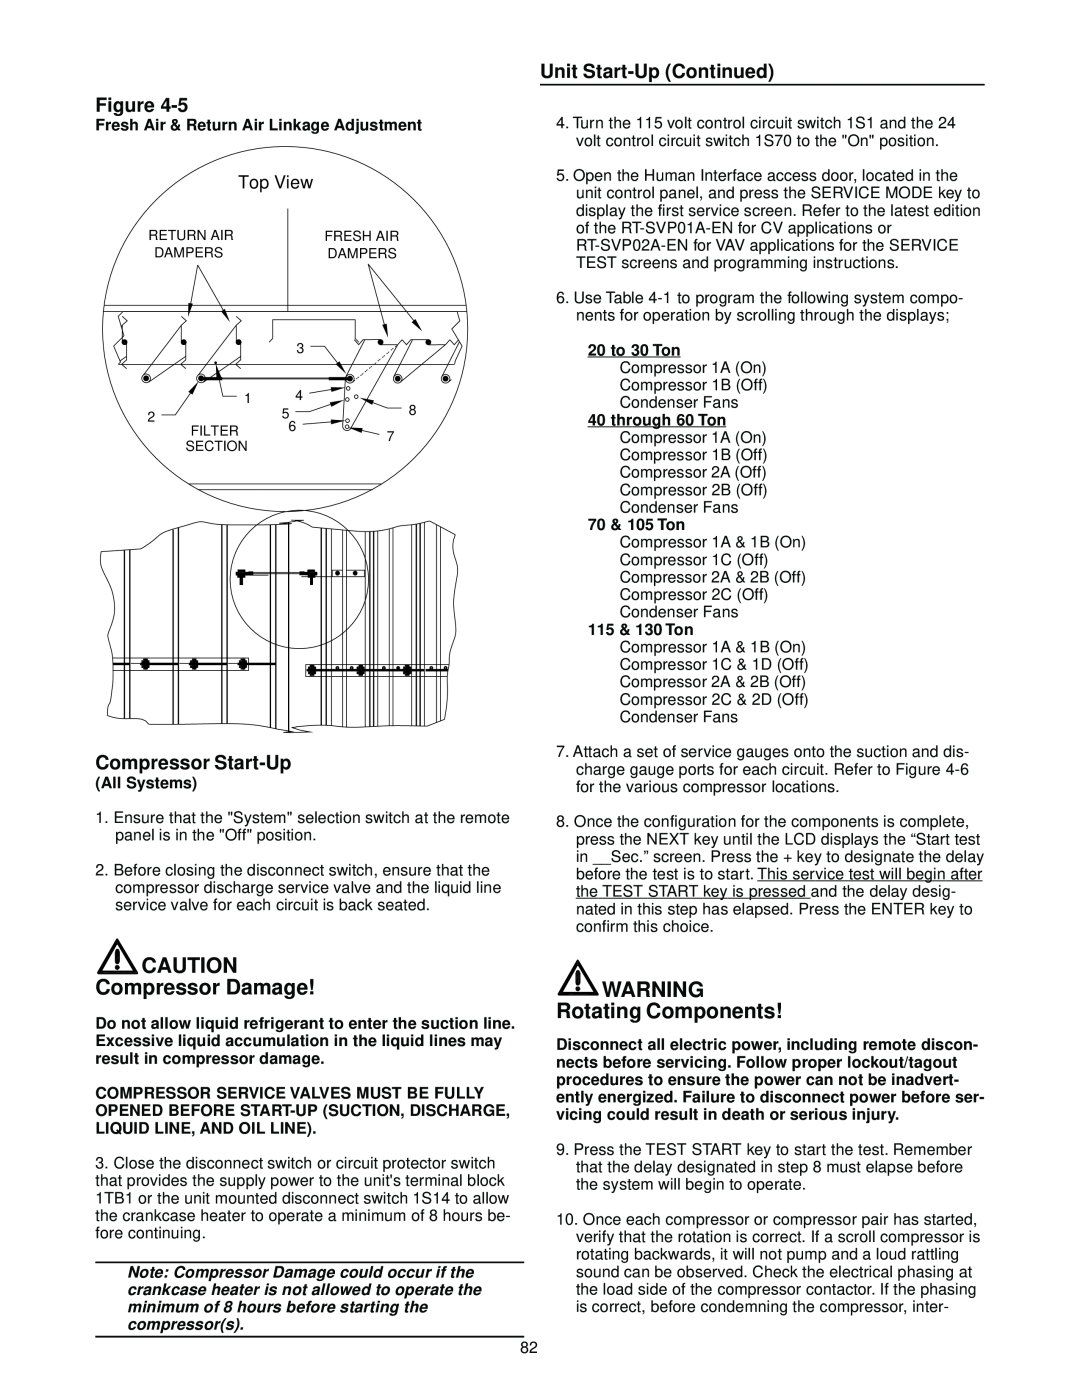 Trane RT-SVX10C-EN Compressor Start-Up, Compressor Damage, Rotating Components, Figure, Unit Start-UpContinued, Top View 